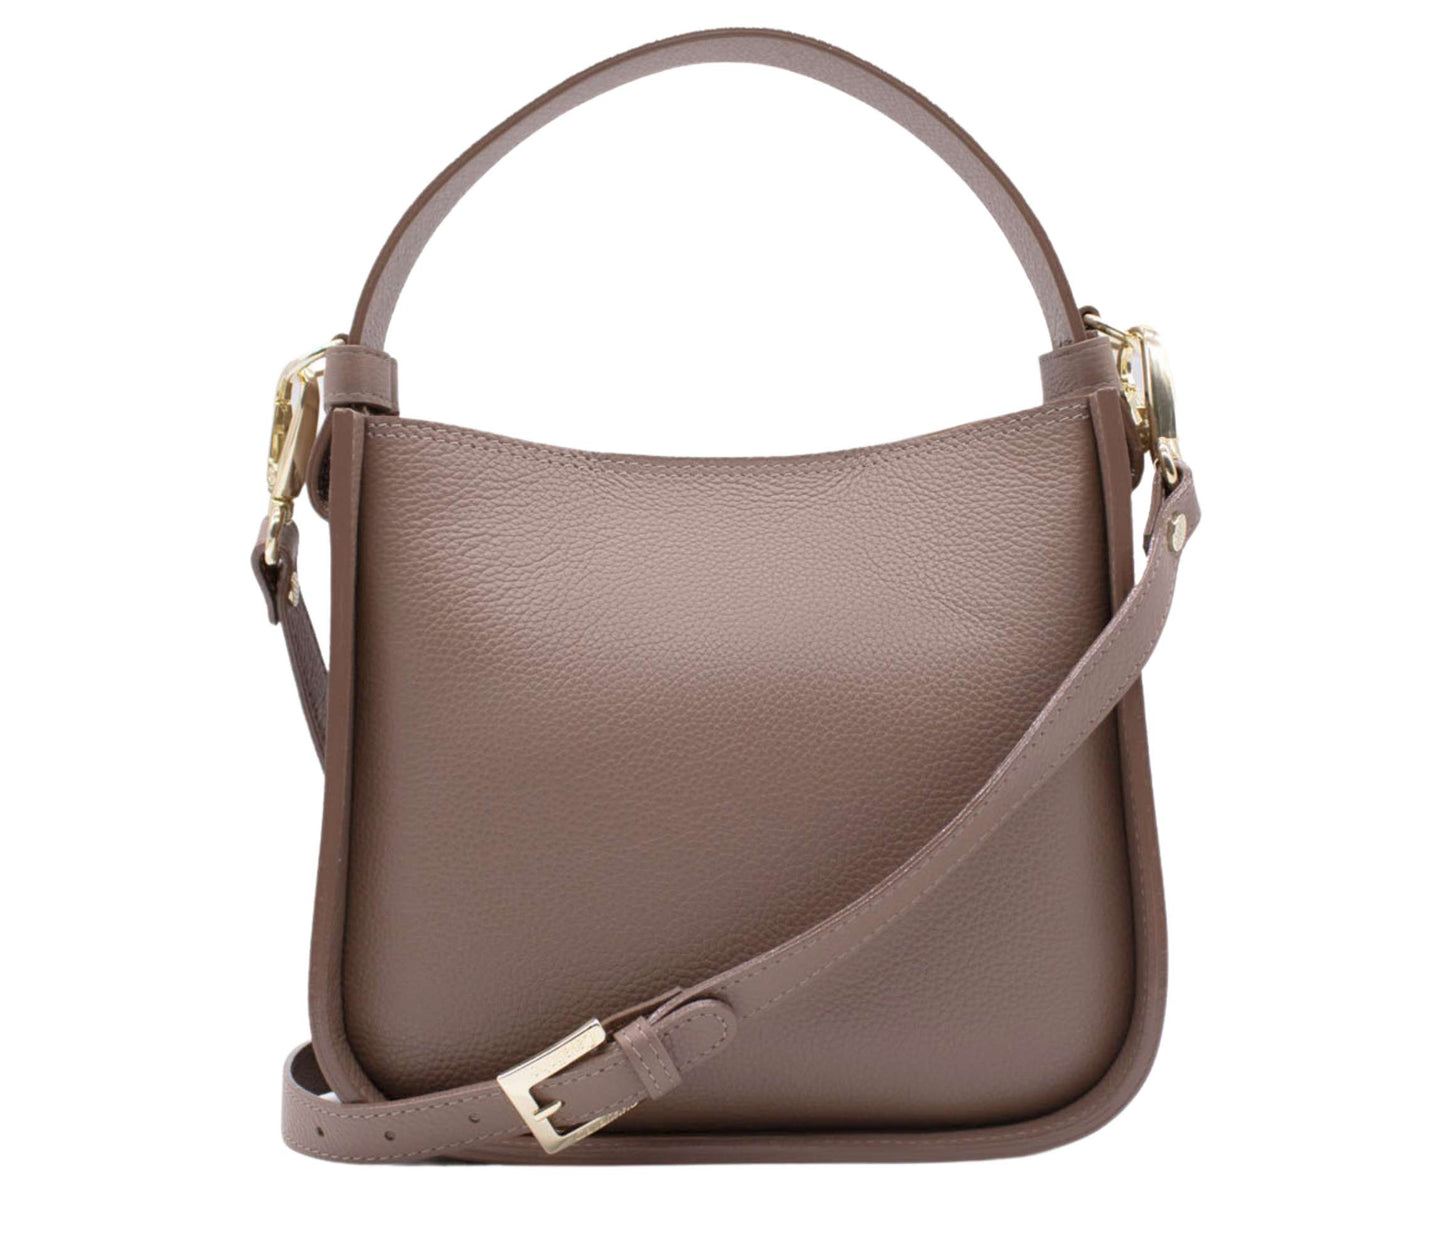 Cavalinho Muse Leather Handbag - Sand - 18300475.07.99_4